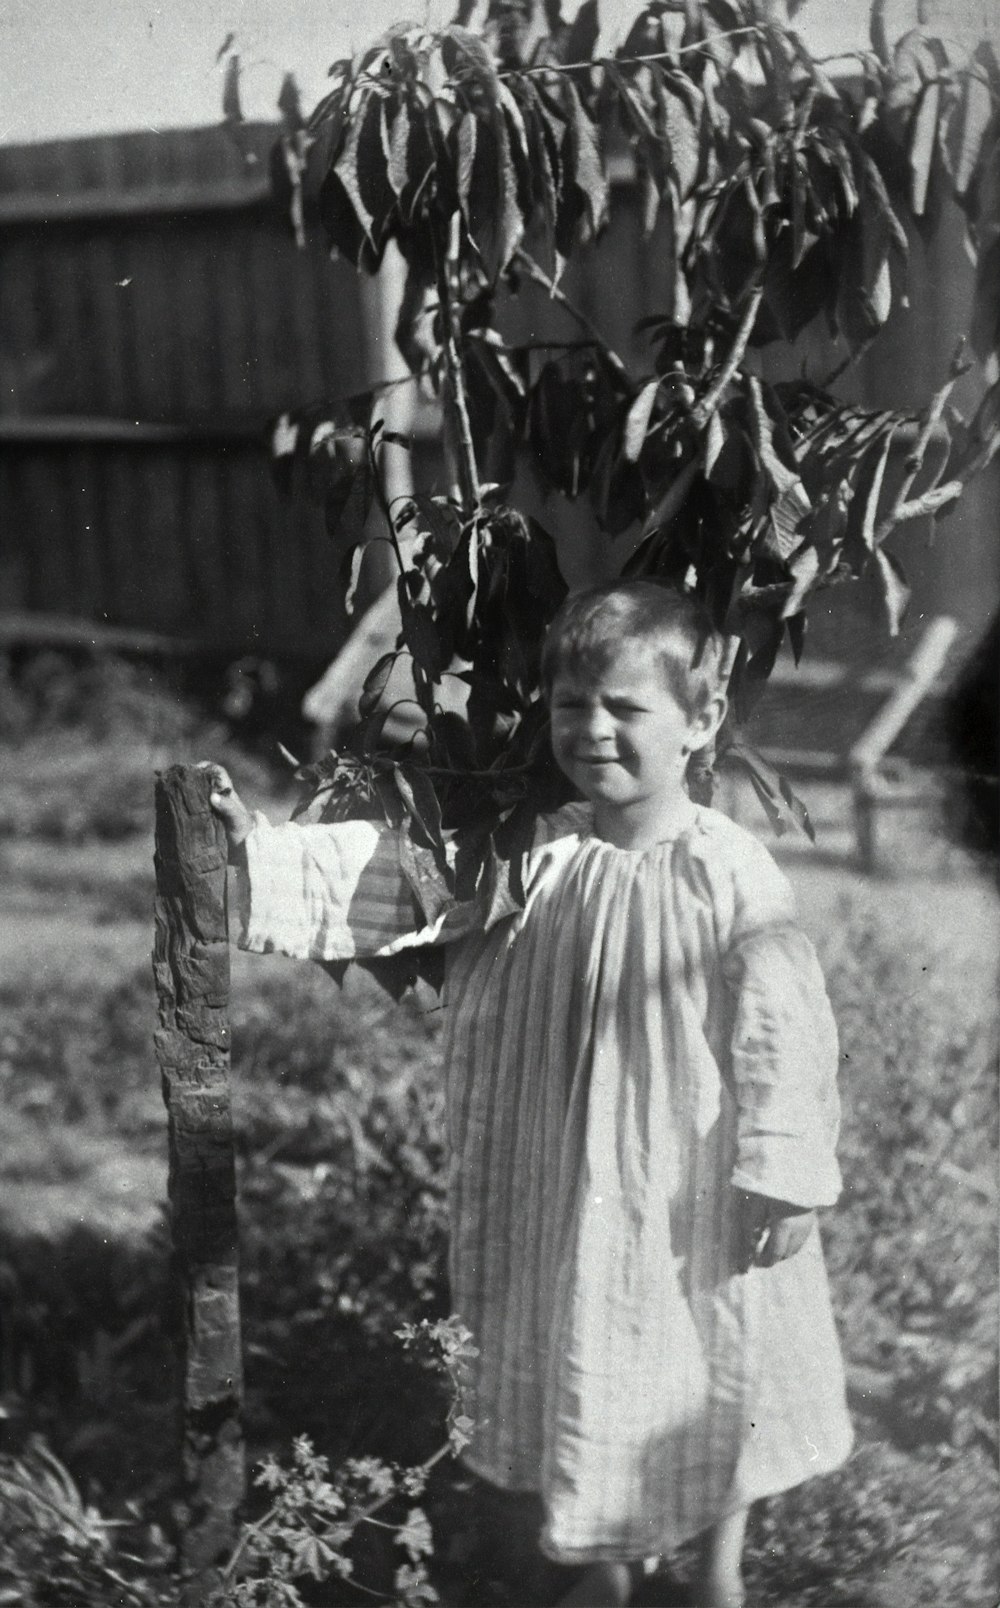 monochrome photo of toddler wearing sleepwear near plant